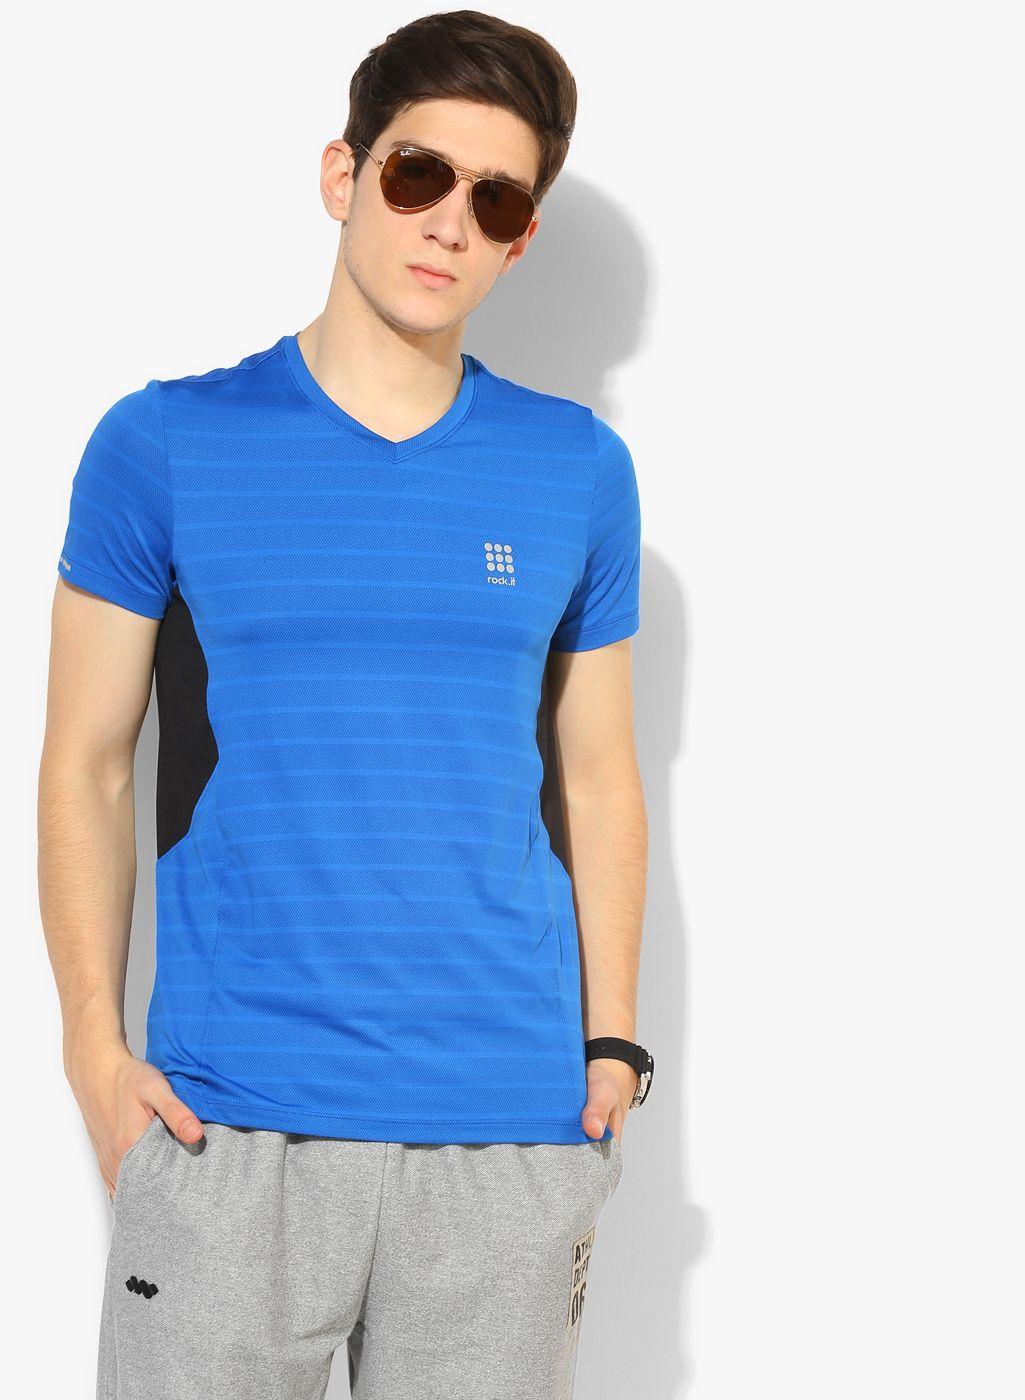 blue striped v neck t-shirt